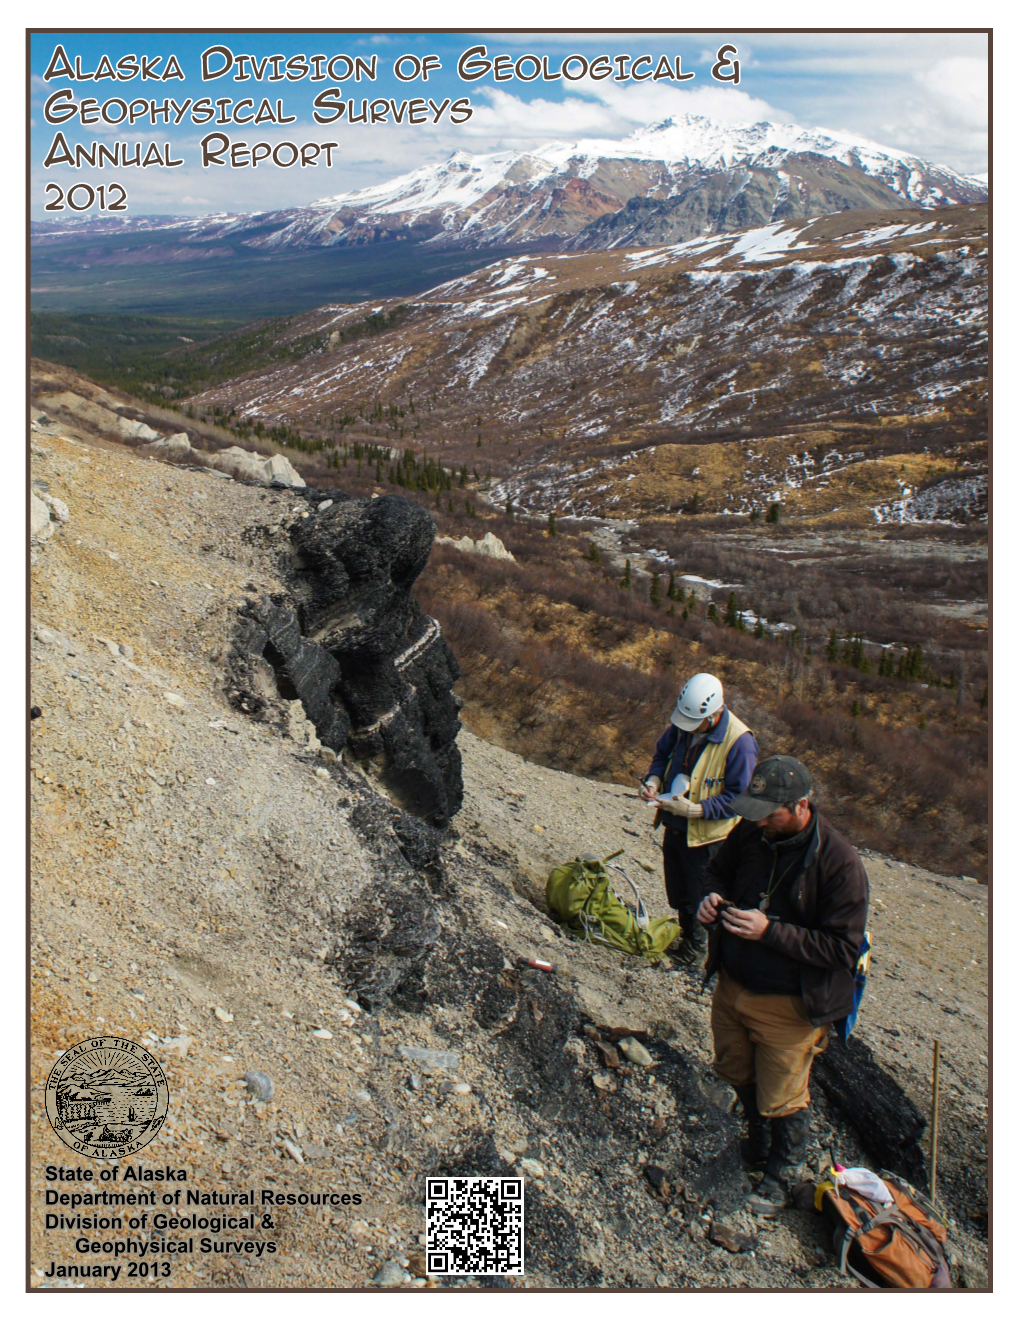 Alaska Division of Geological & Geophysical Surveys Annual Report